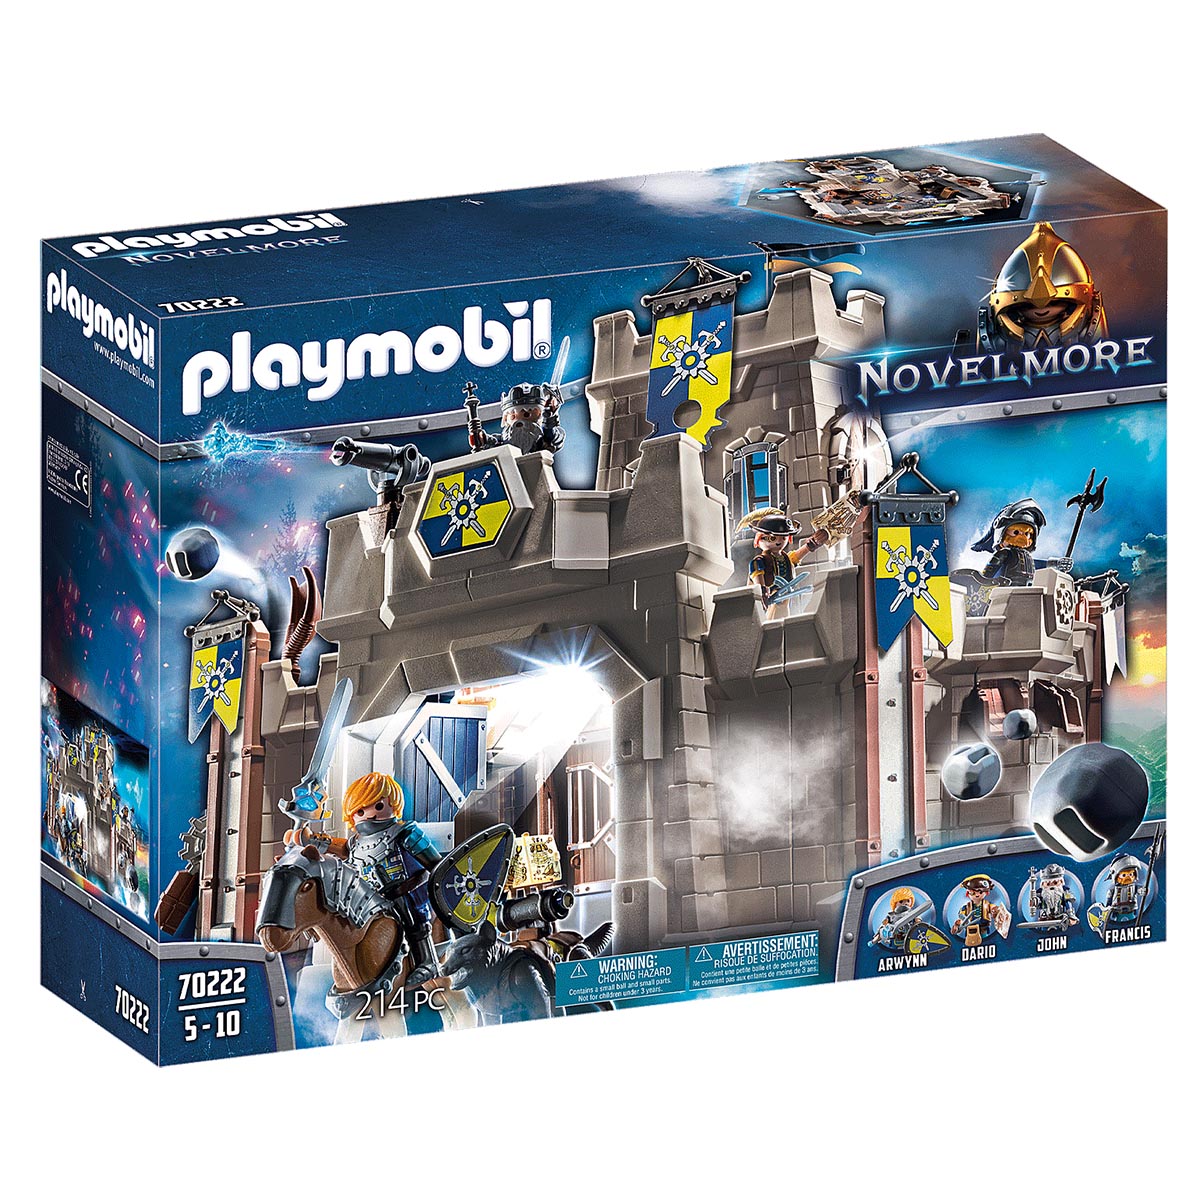 Playmobil Novelmore Knights Castles, Ships & Figures Fun Playsets